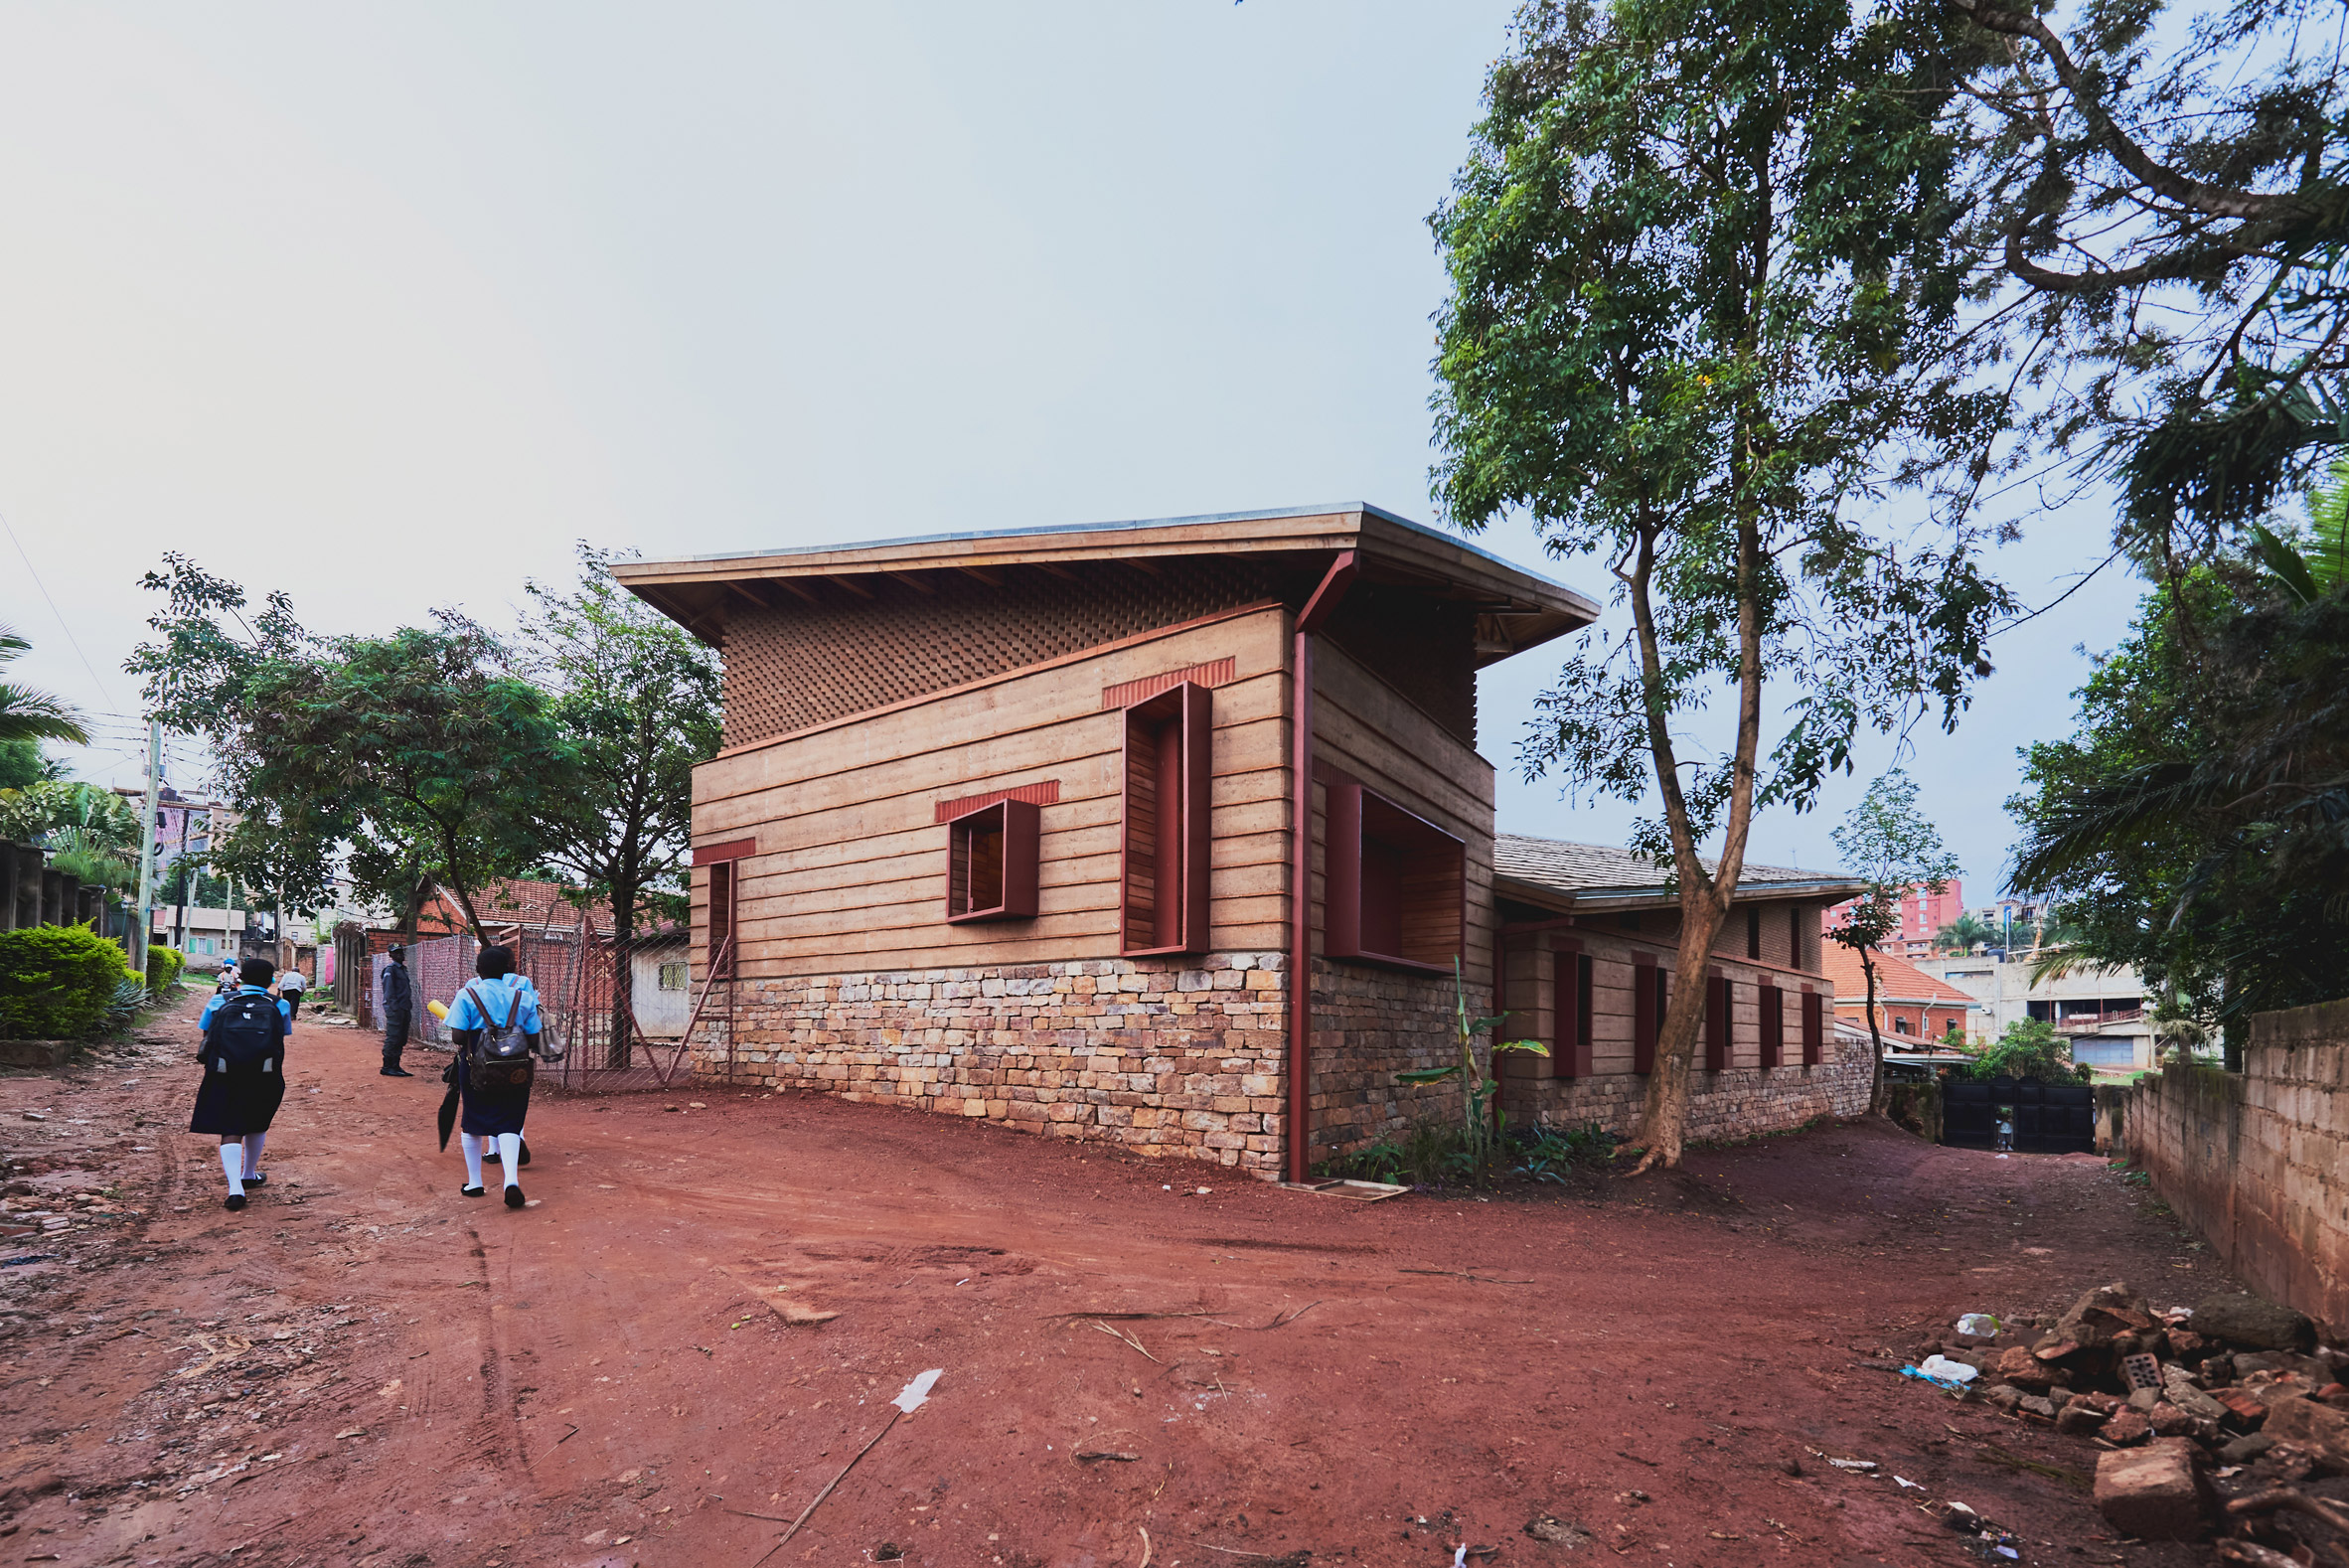 Buy Uganda Build Uganda Work Station. in Central Division - Furniture,  Mugera Interiors